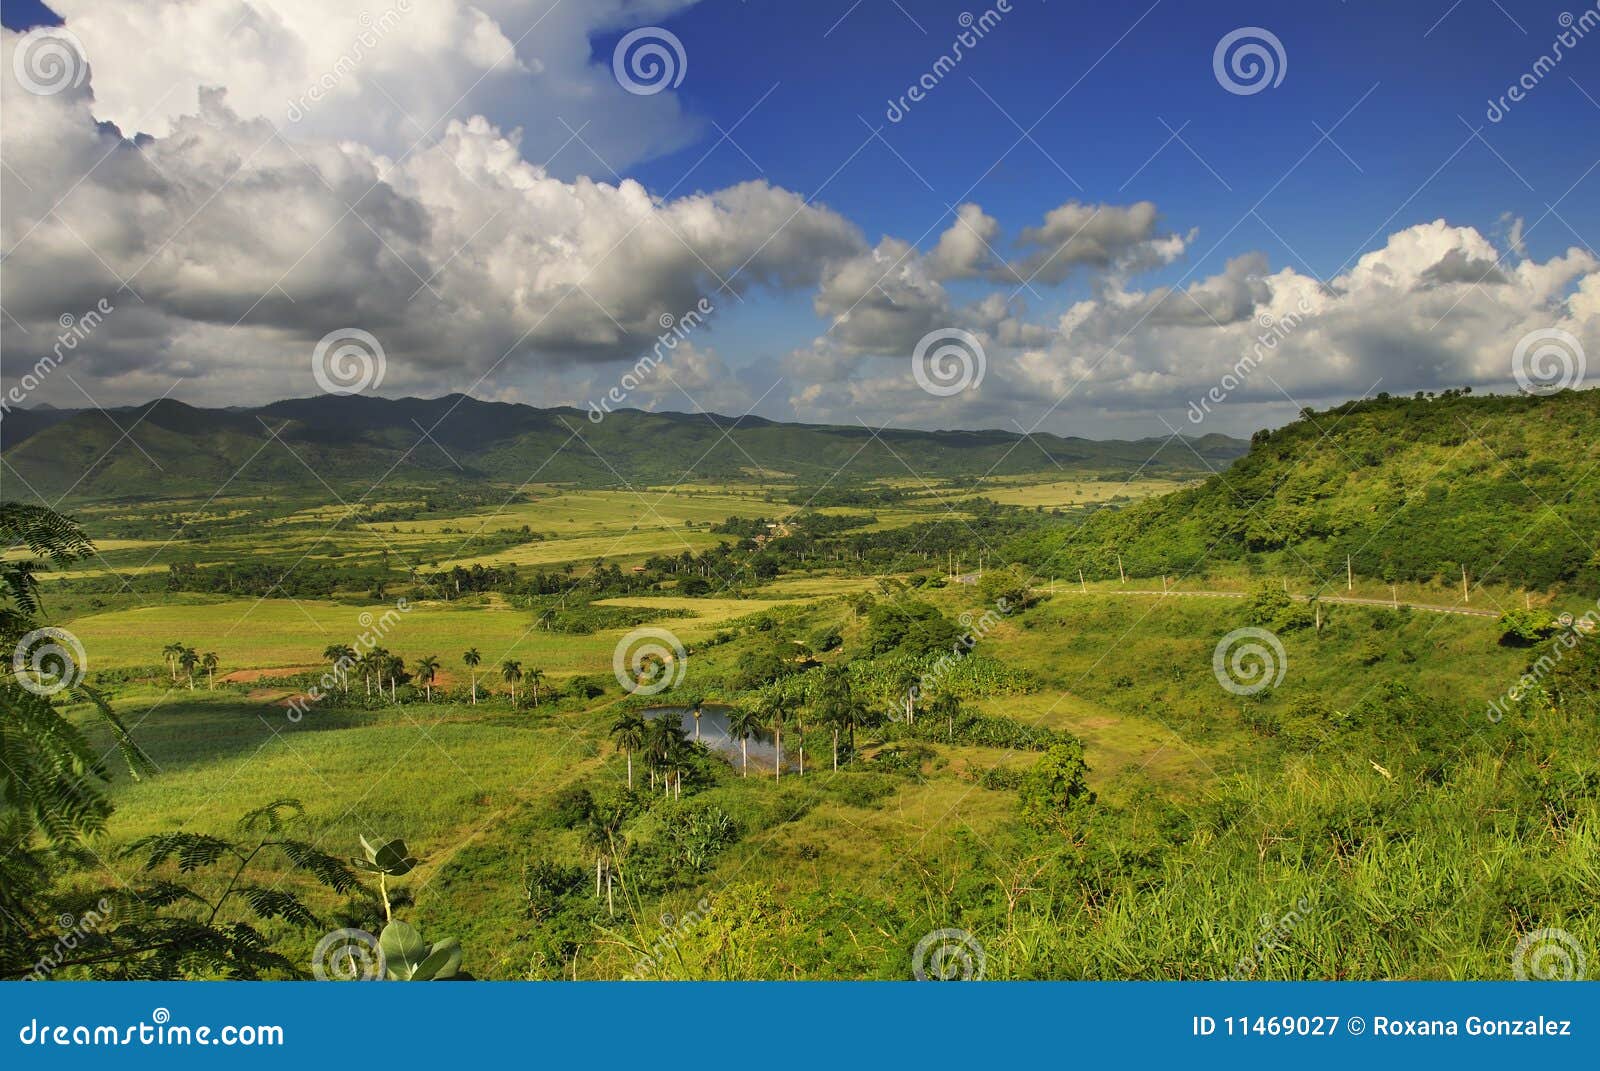 cuban countryside landscape - escambray sierra